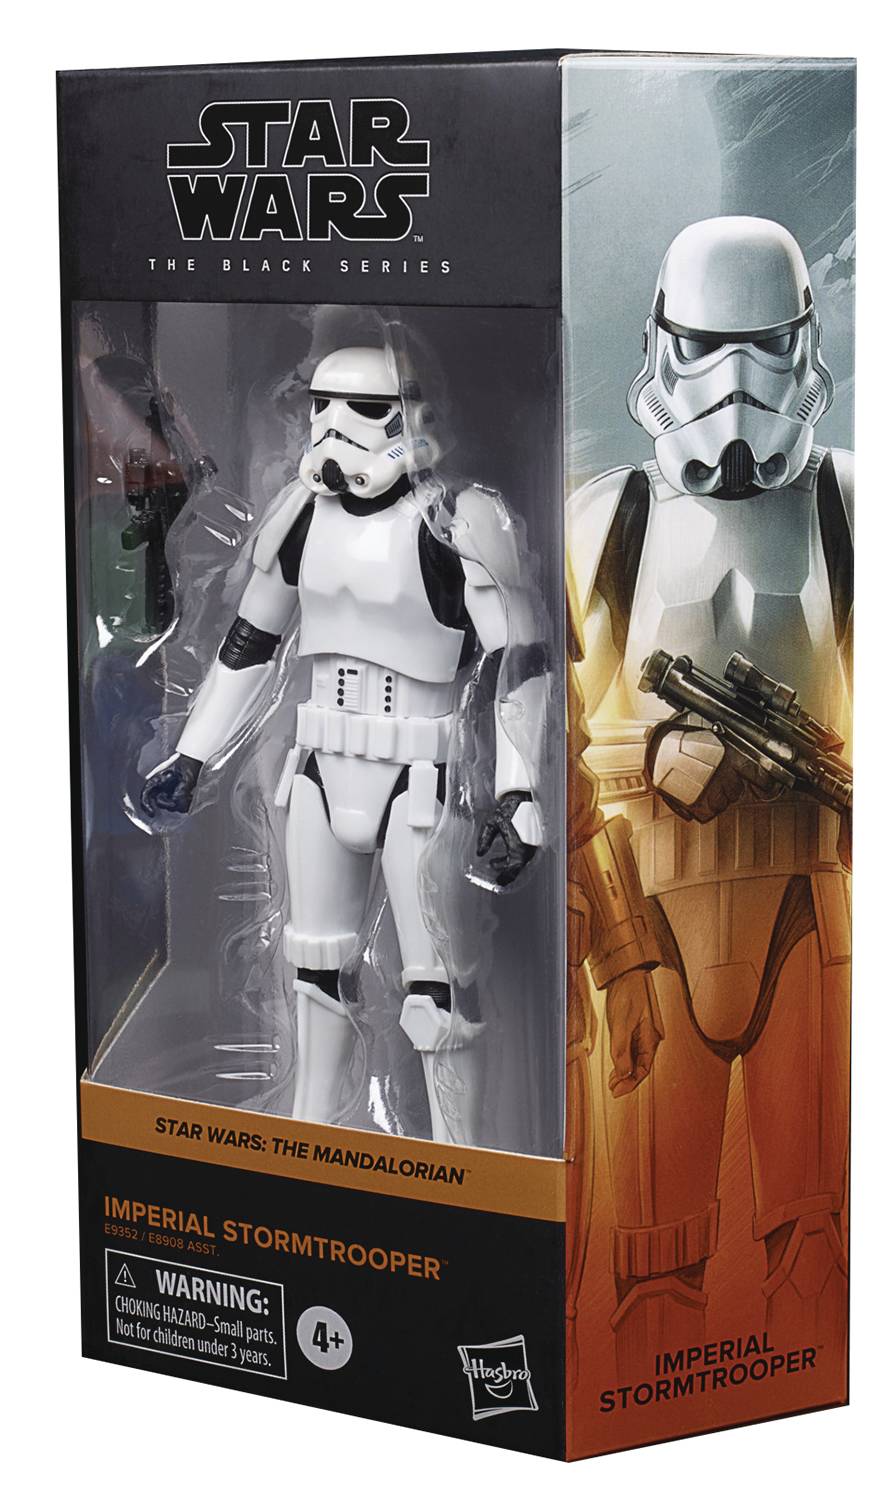 star wars collector series stormtrooper